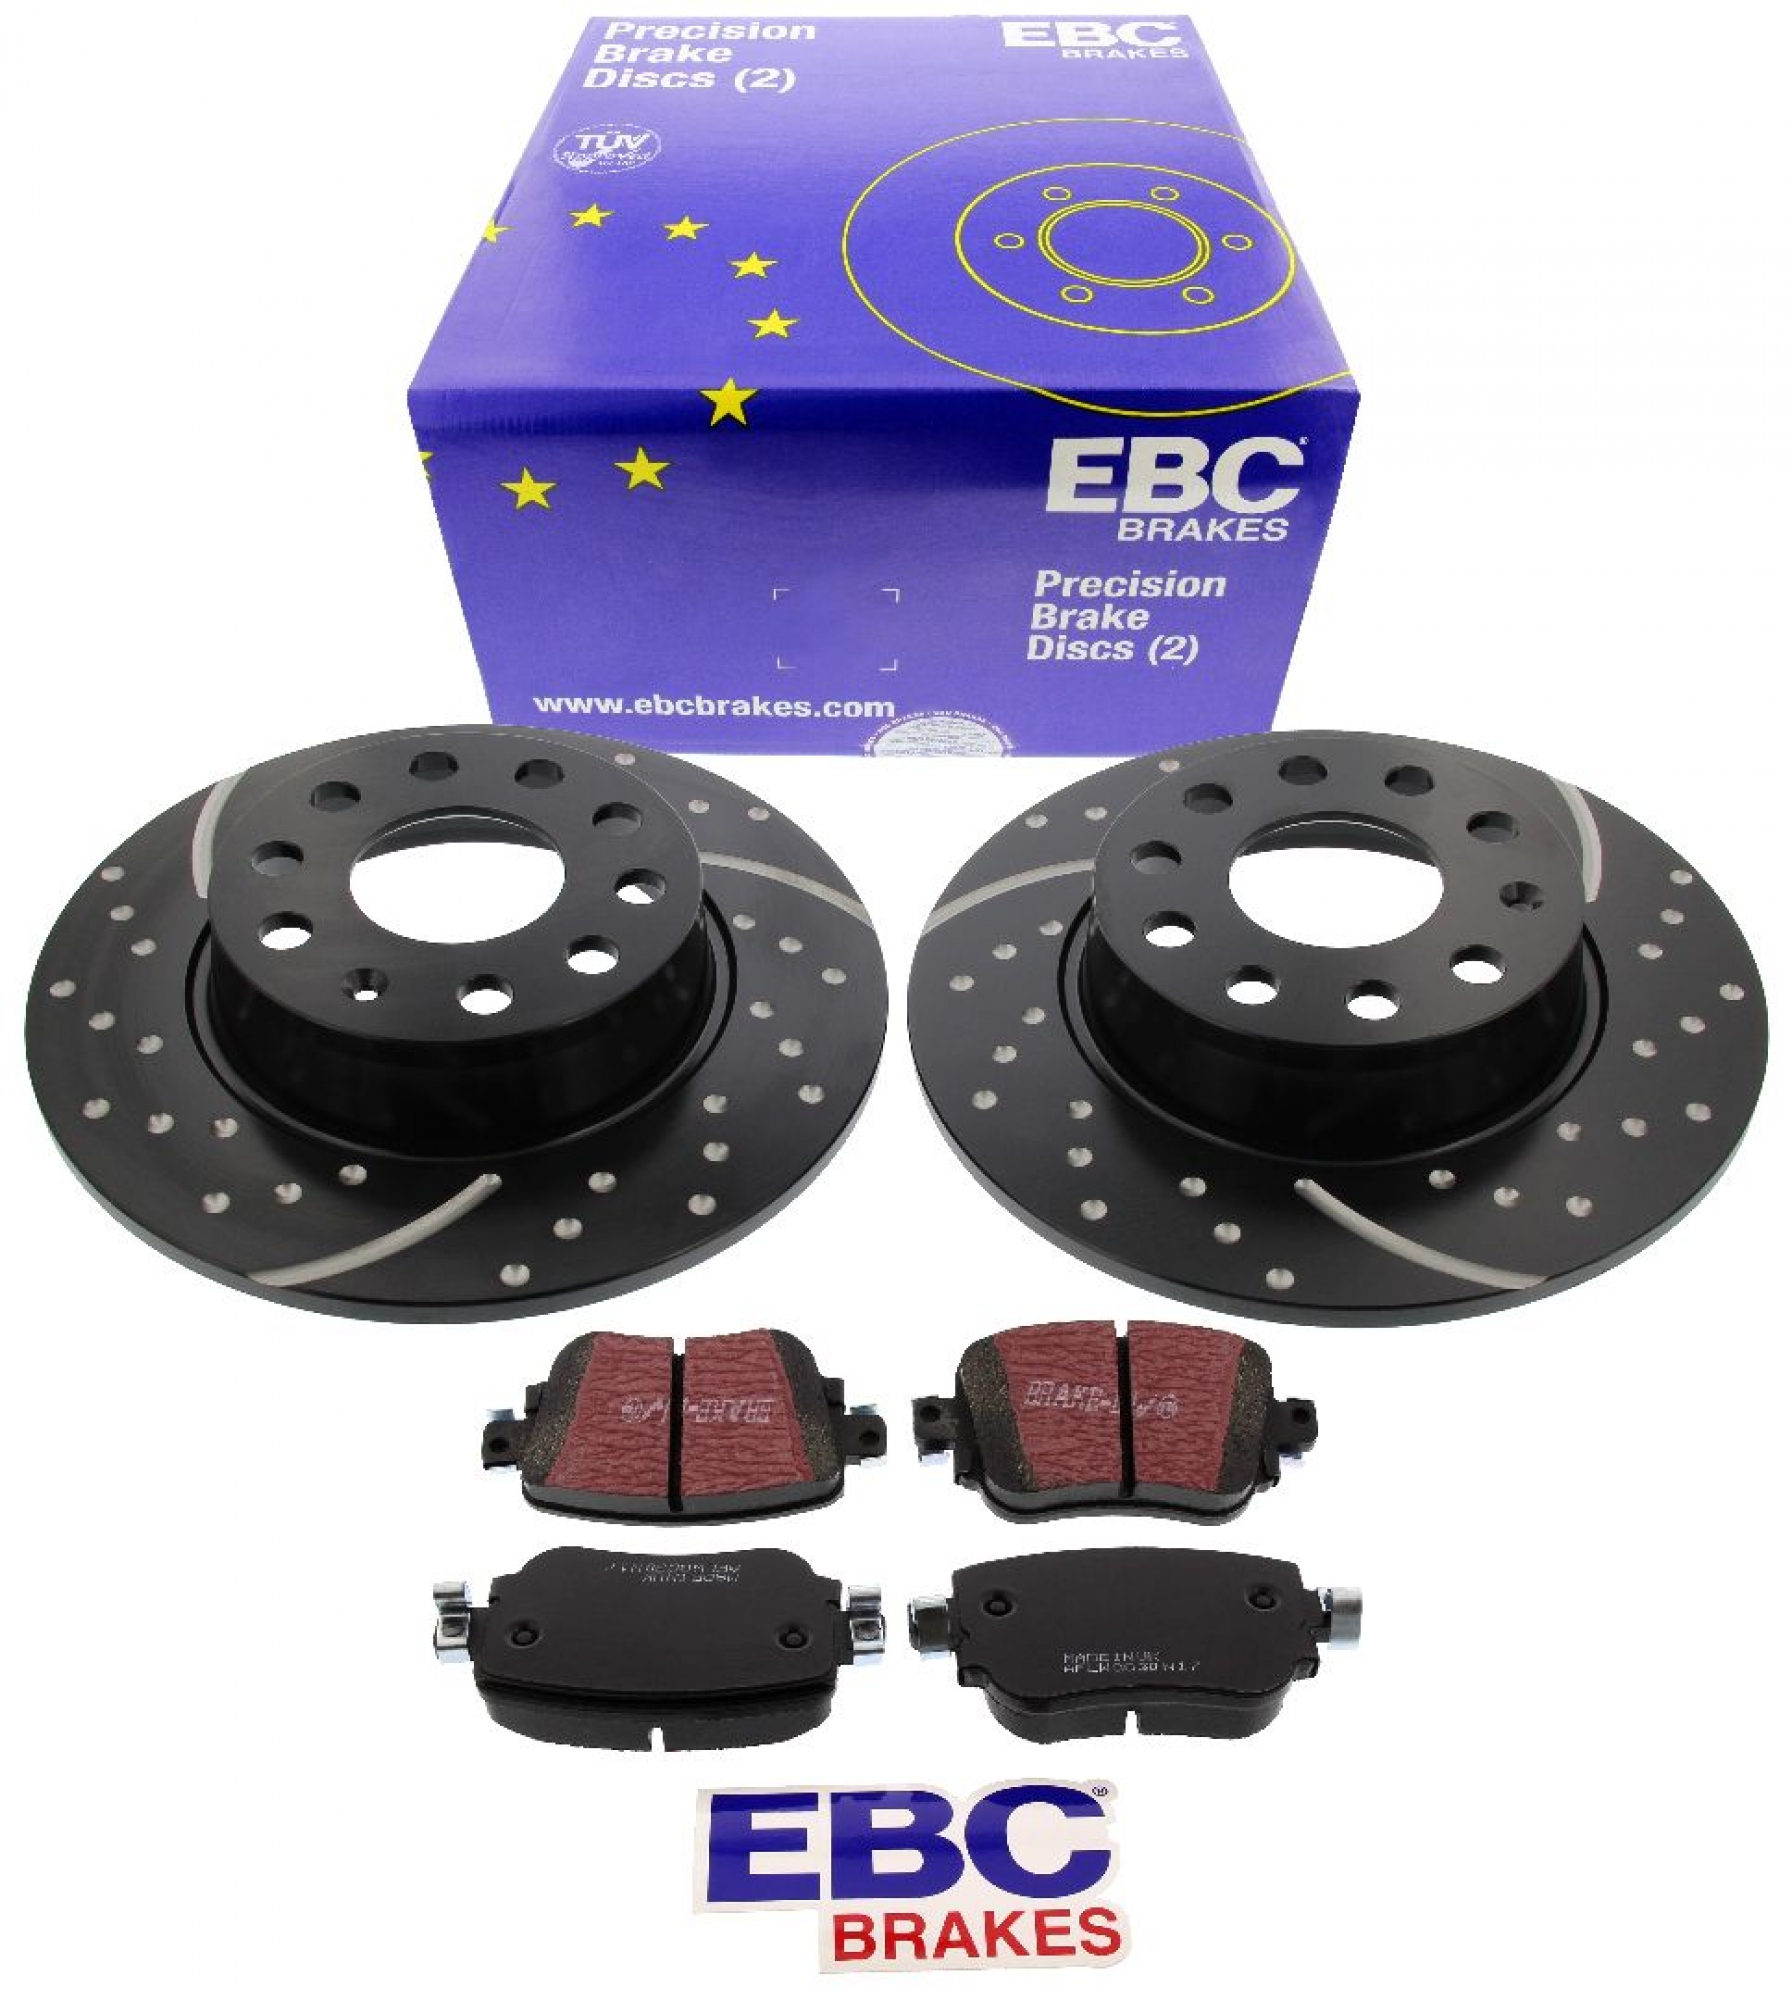 EBC-Bremsensatz, Turbo Groove Disc Black + Bremsbeläge, Blackstuff, Achssatz, HA, Audi, Seat, Skoda, VW